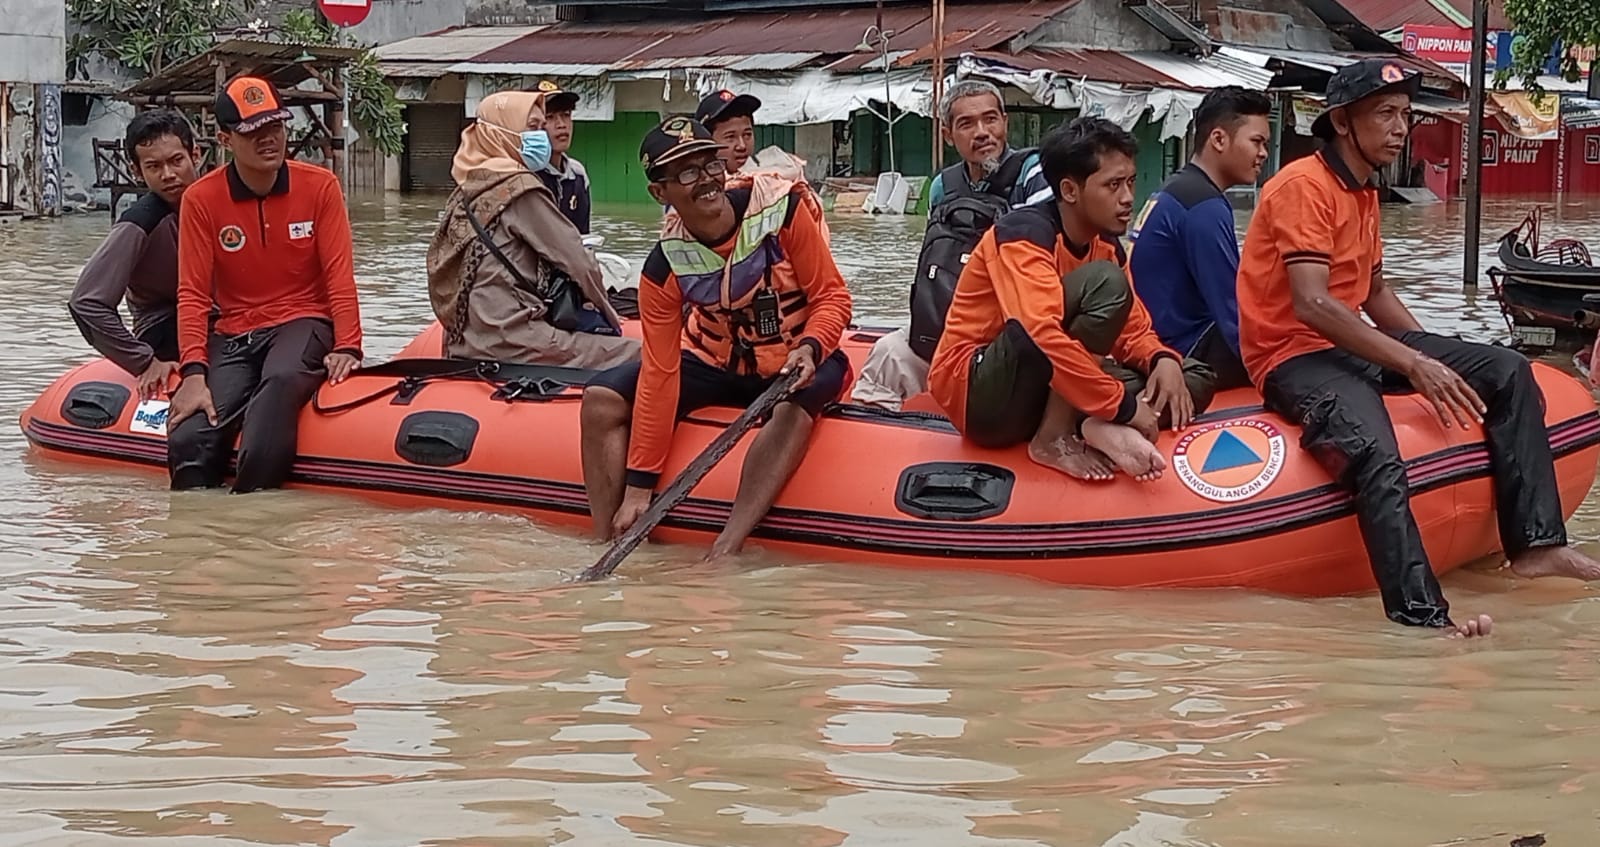 Upaya pencarian korban banjir oleh Tim SAR gabungan di Grobogan. (Masrikin/kabarterdepan.com) 